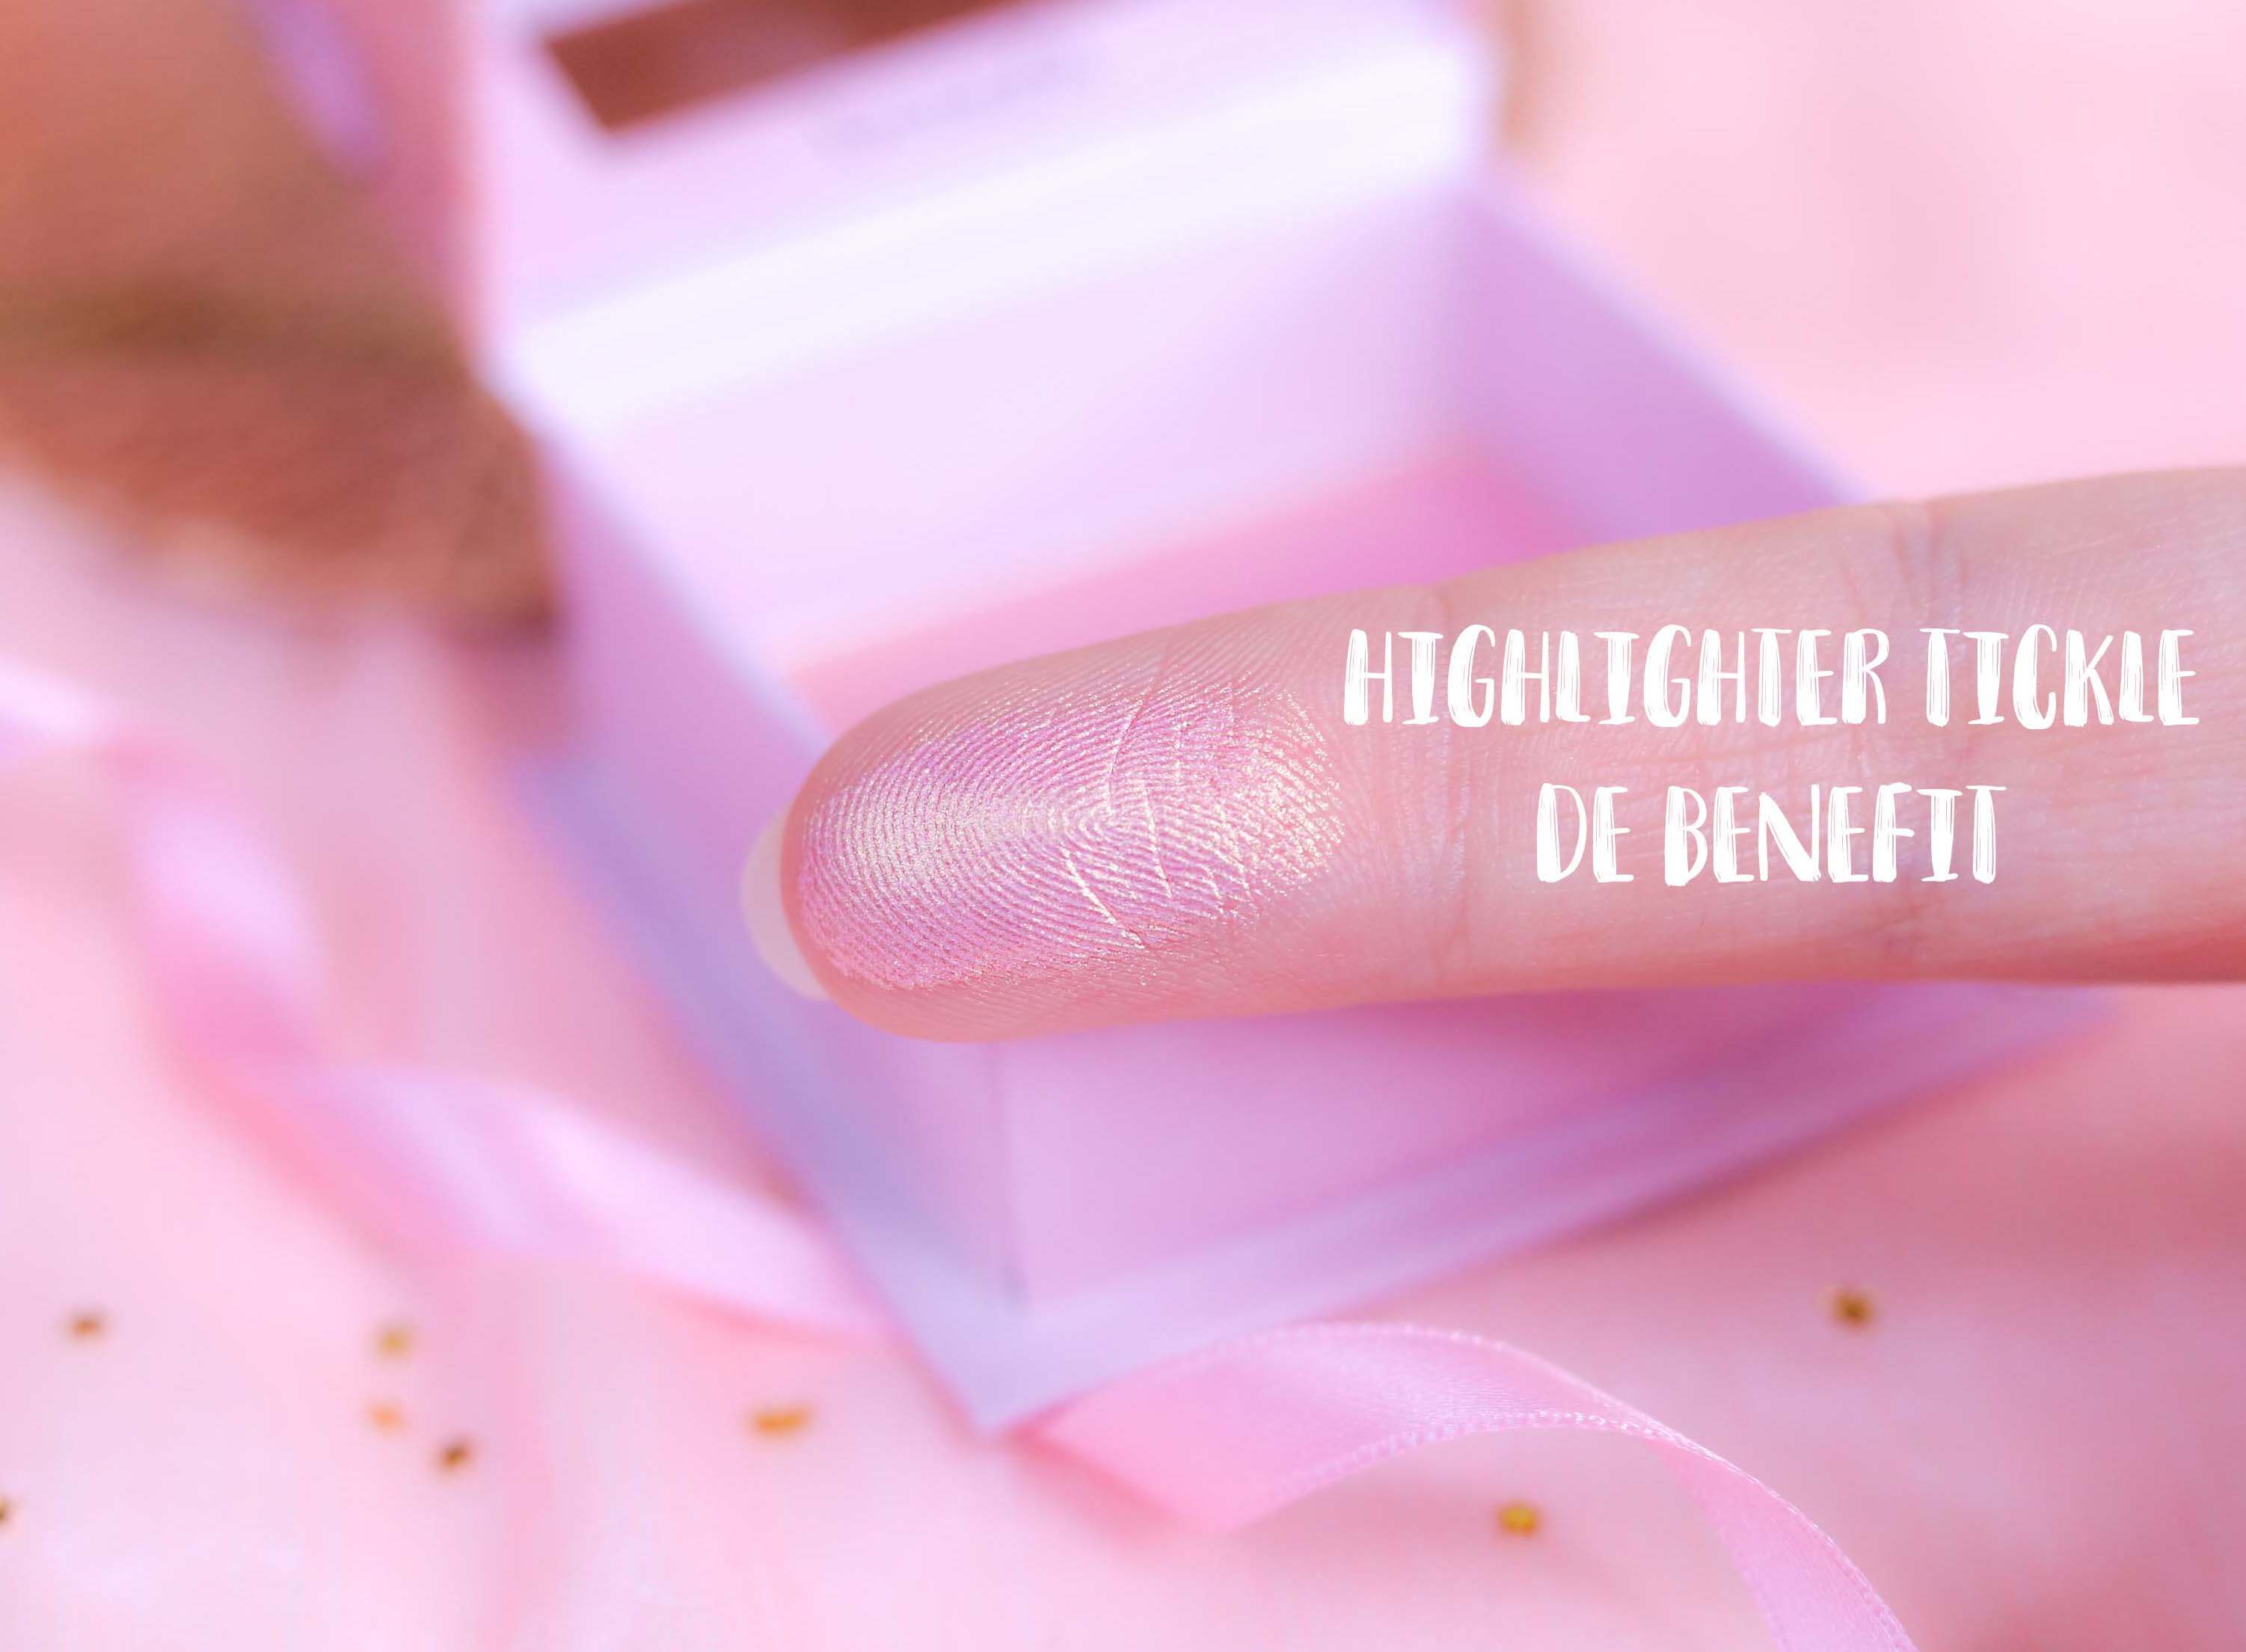 revue-highlighter-benefit-tickle-cookie-france-sephora-rose-gold-makeupbyazadig-avis-swatch-prix-swatches